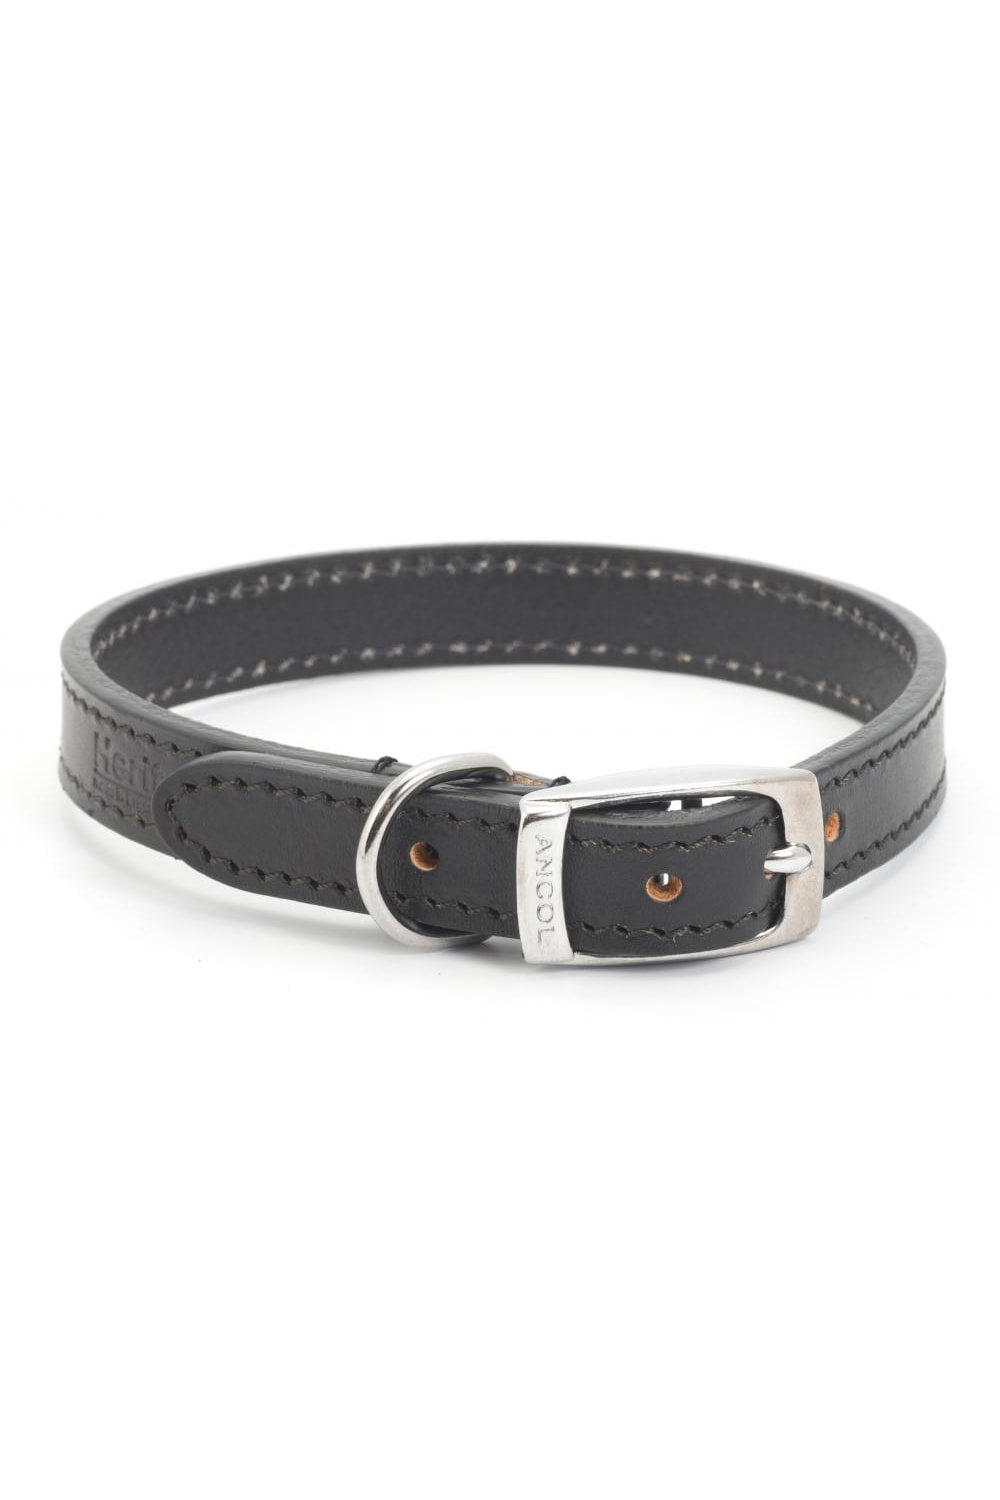 Ancol Leather Dog Collar (Black) (12 Inch)